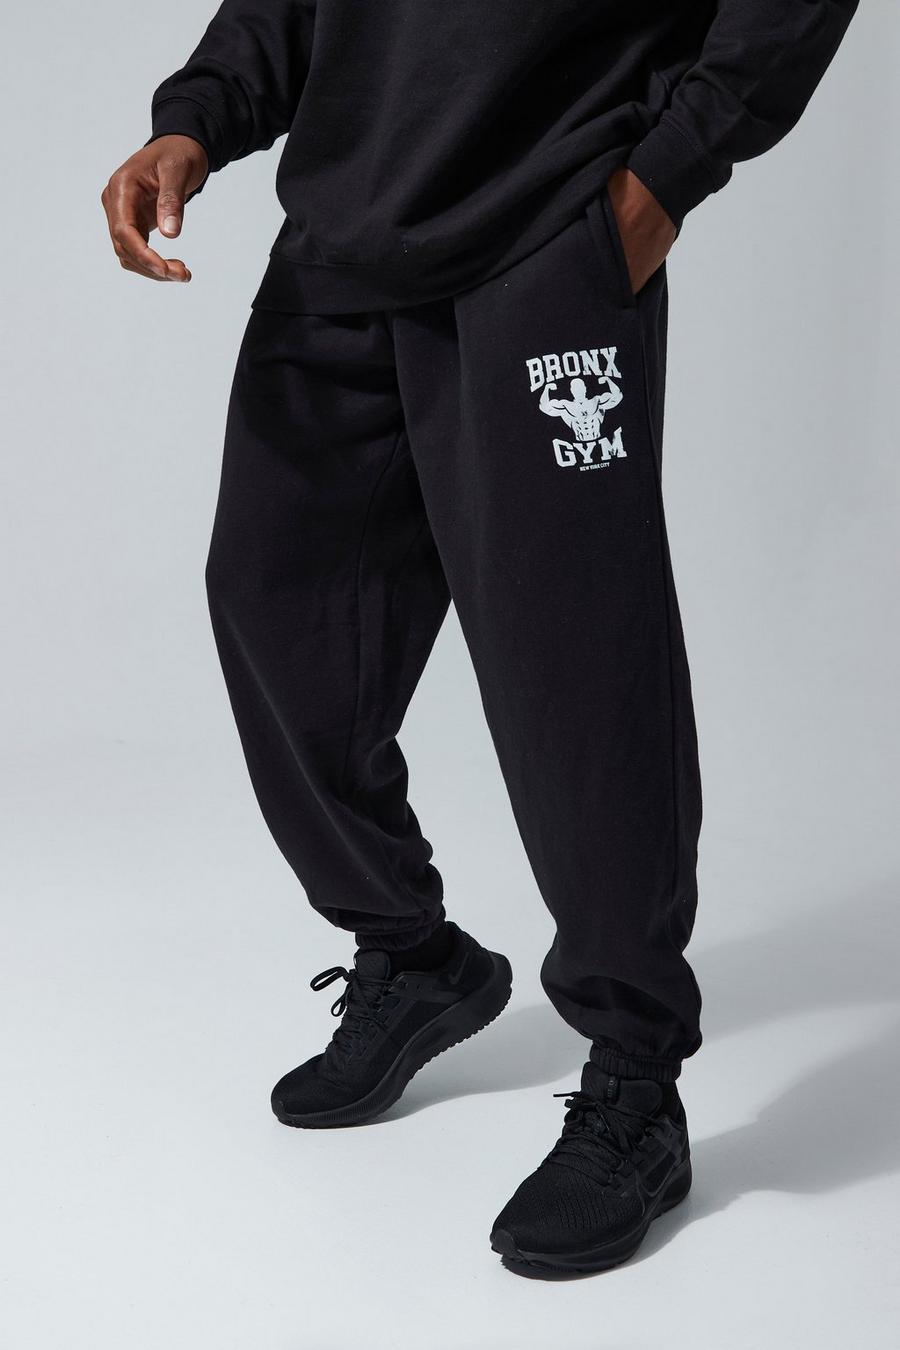 Pantaloni tuta oversize Man Active Bronx Gym, Black image number 1